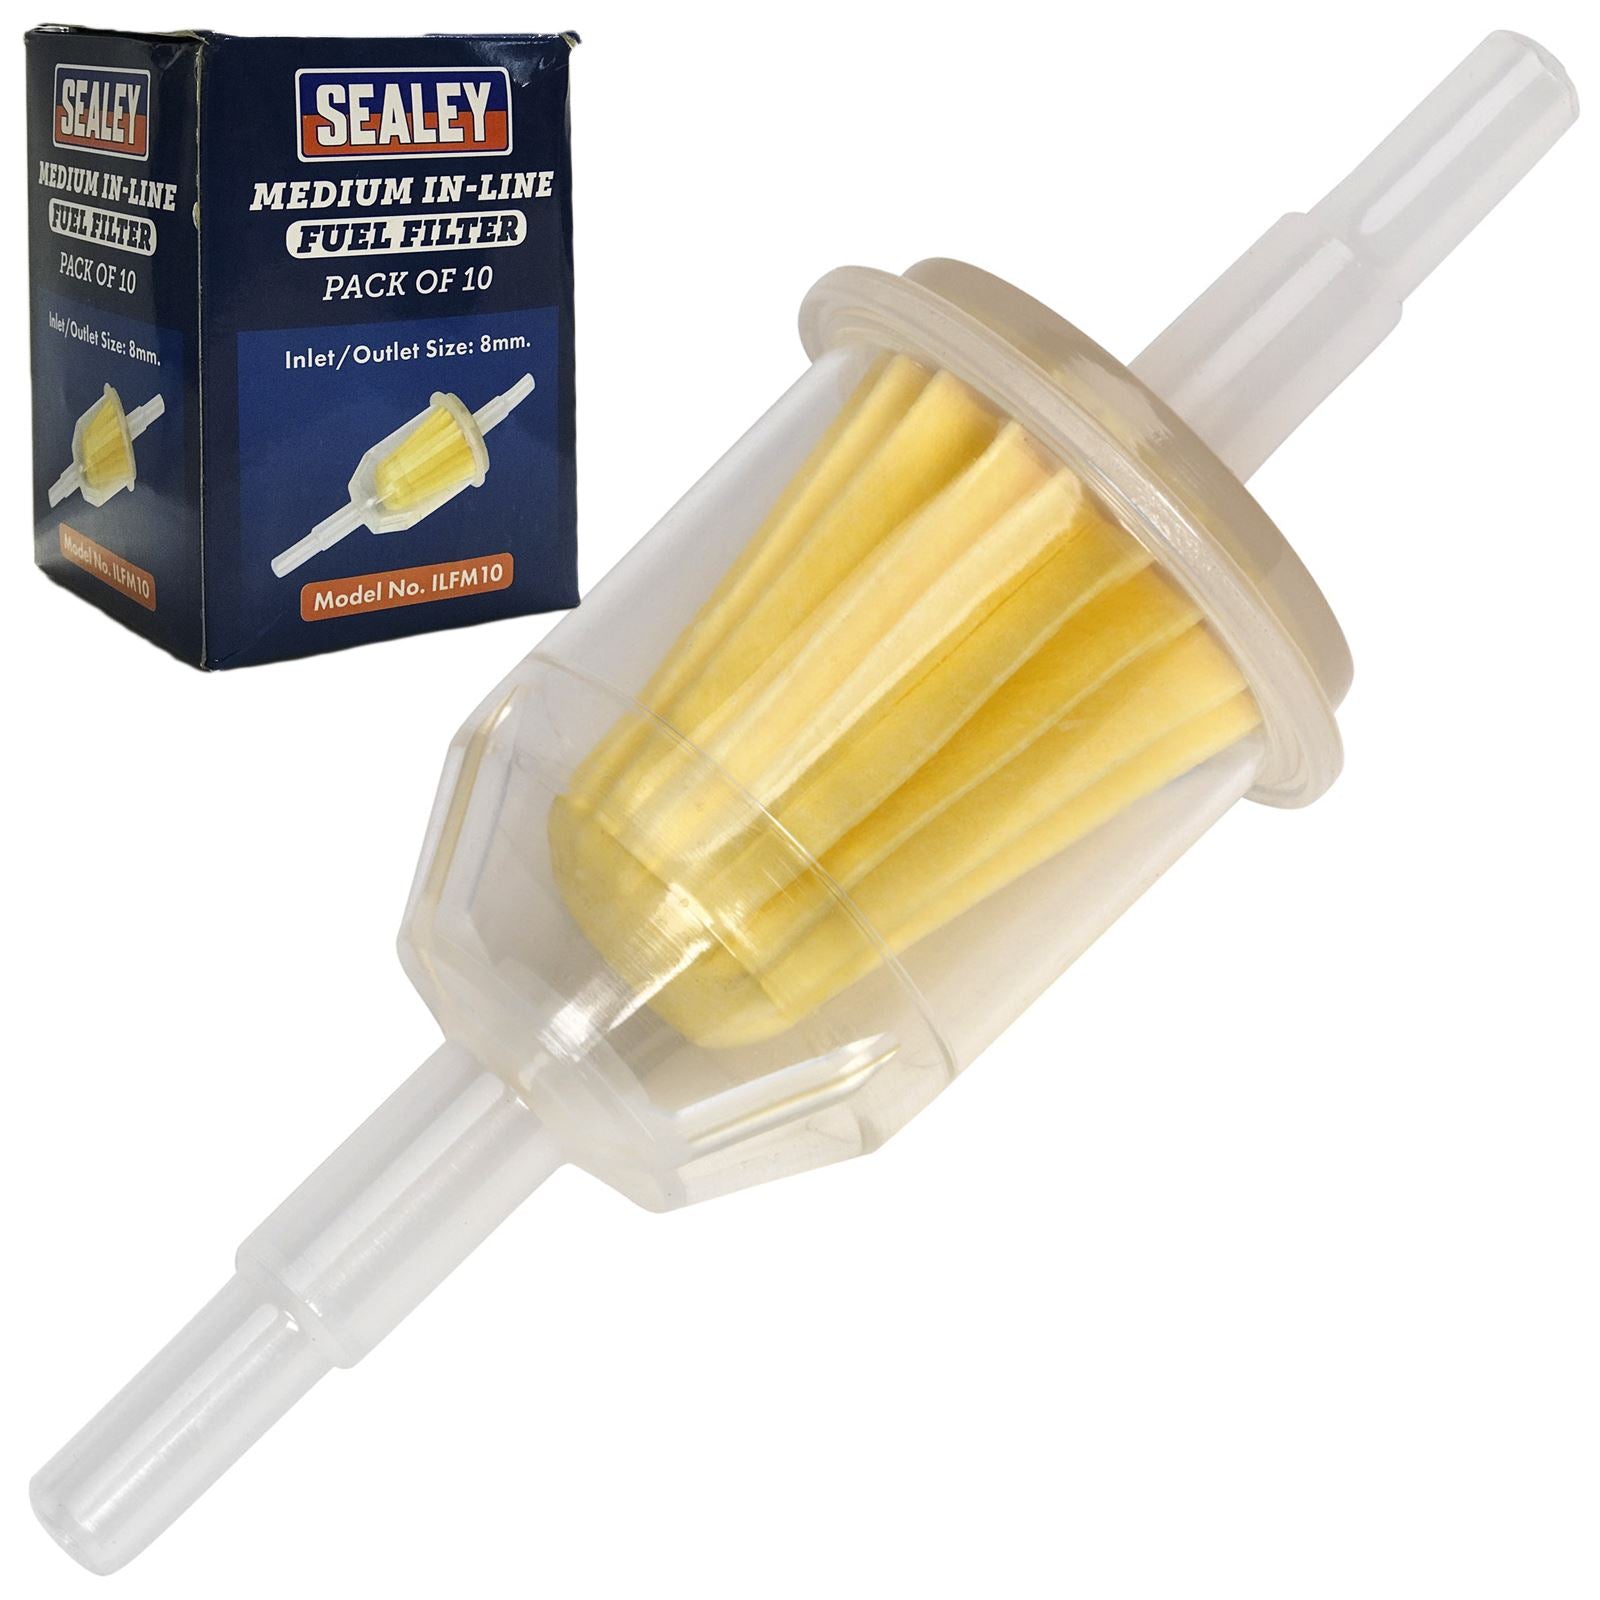 Sealey 10 Pack Medium In Line Fuel Filter 8mm Inlet/Outlet Filter Plant